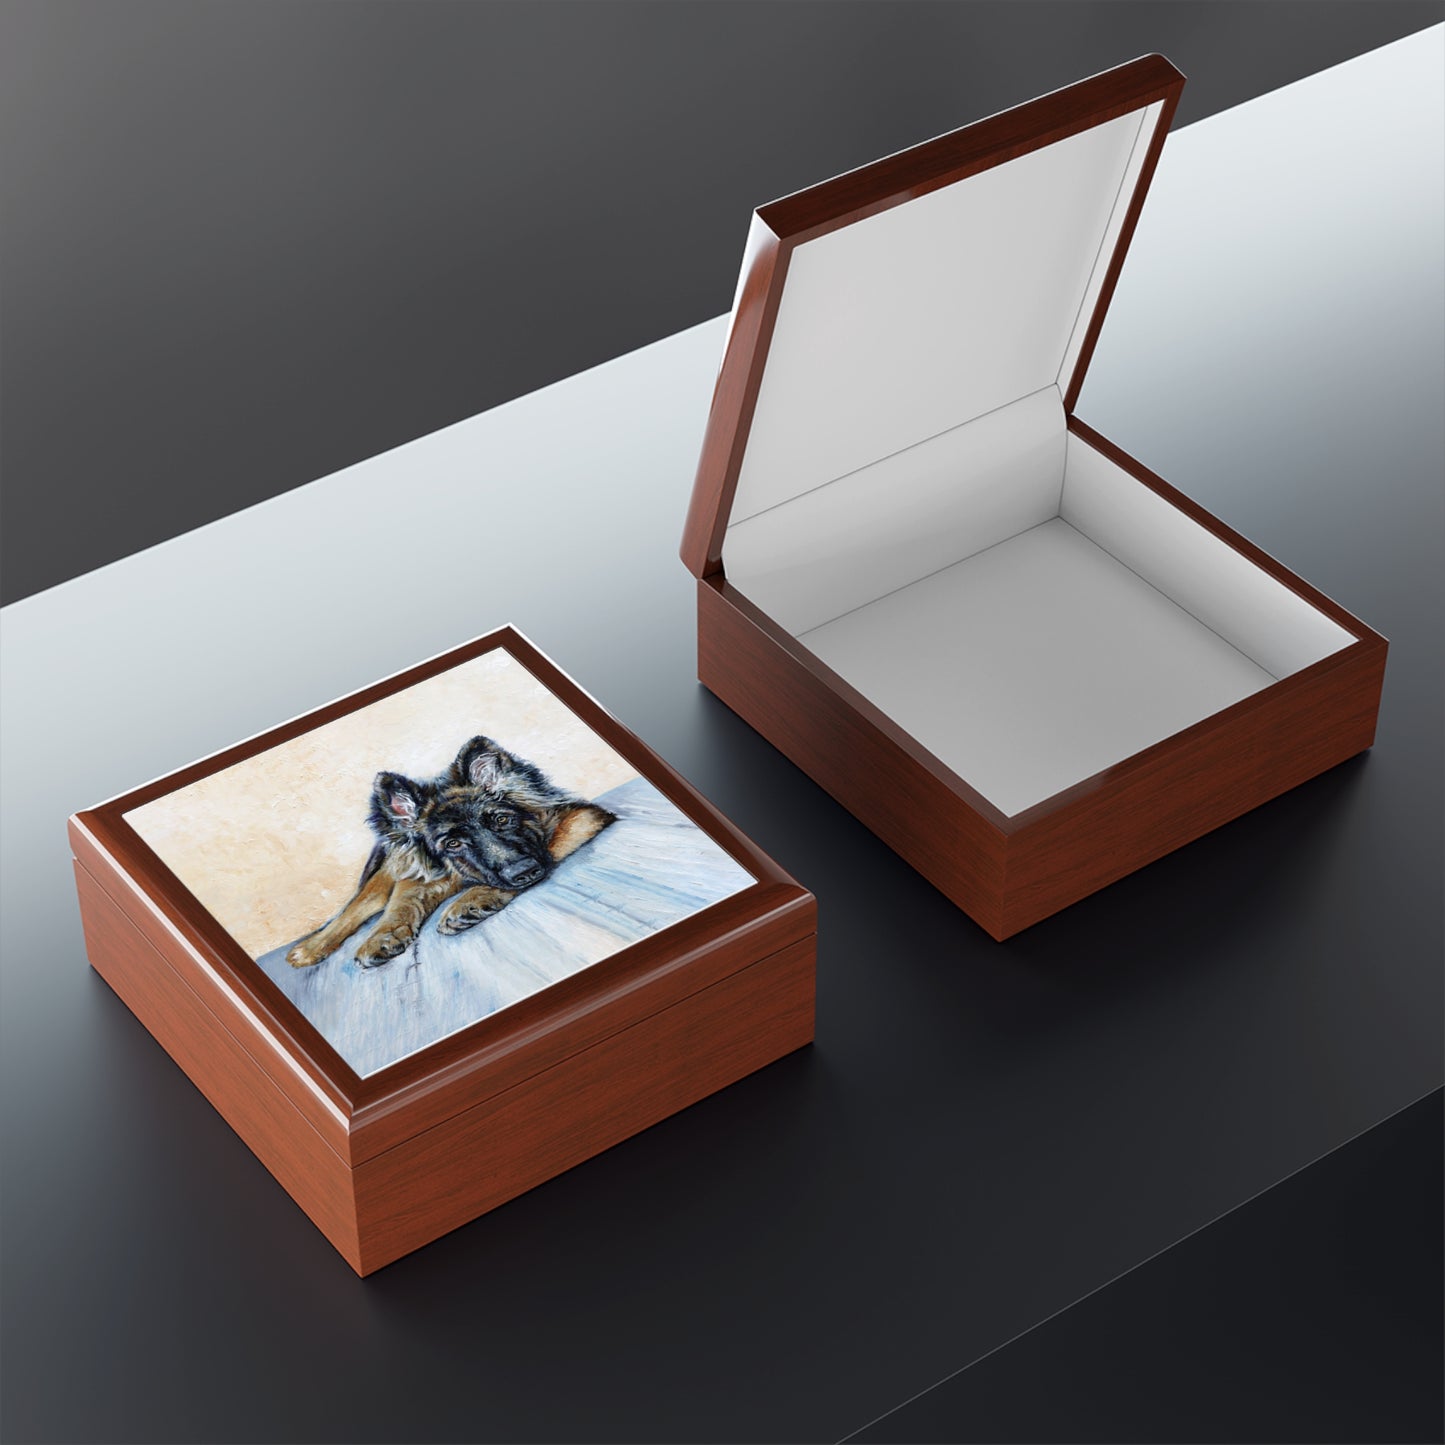 ewelry Box Lacquered  Keepsake box with German Shepherd Image interior